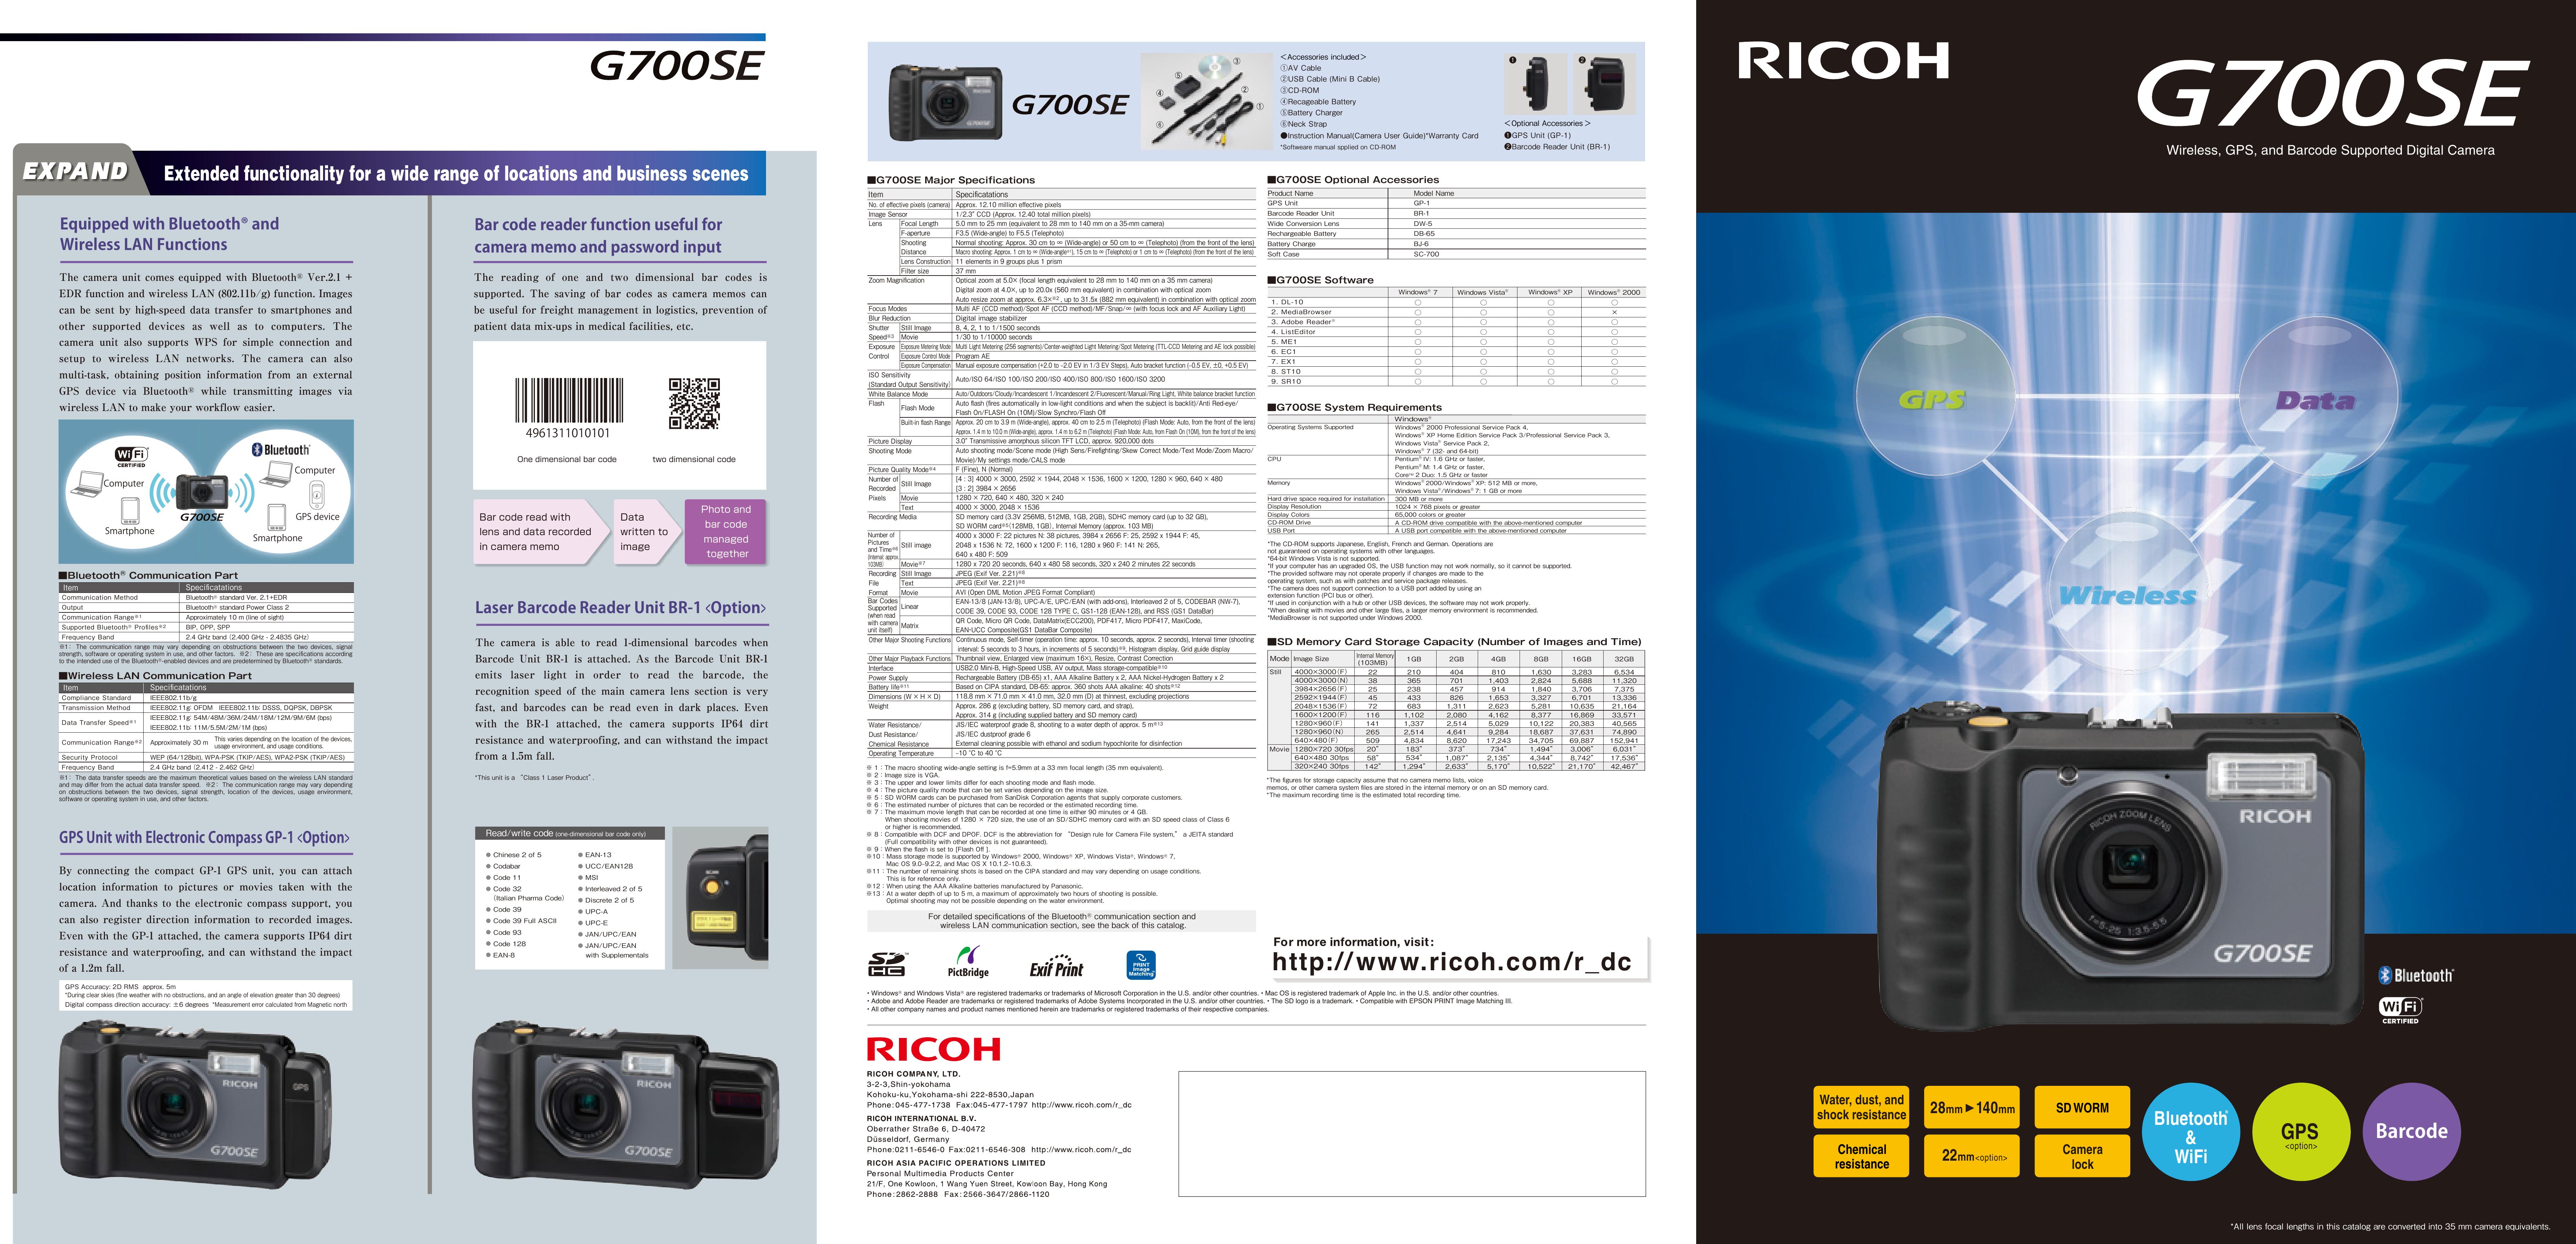 Ricoh G700SE Digital Camera User Manual